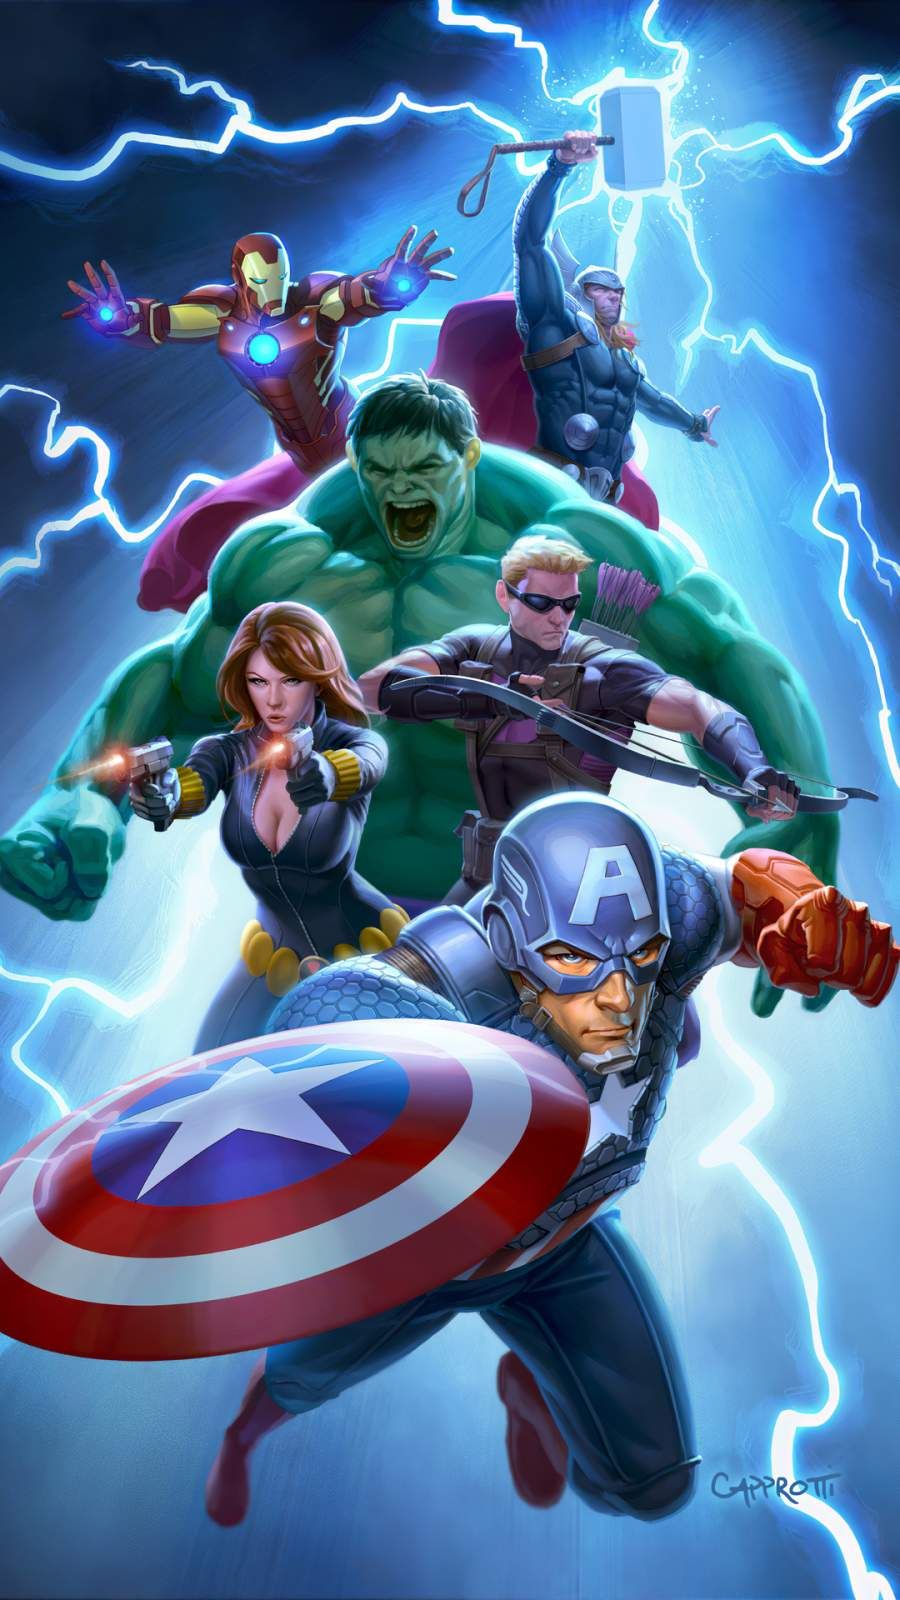 Avengers Animated Poster iPhone Wallpaper Avengers wall art